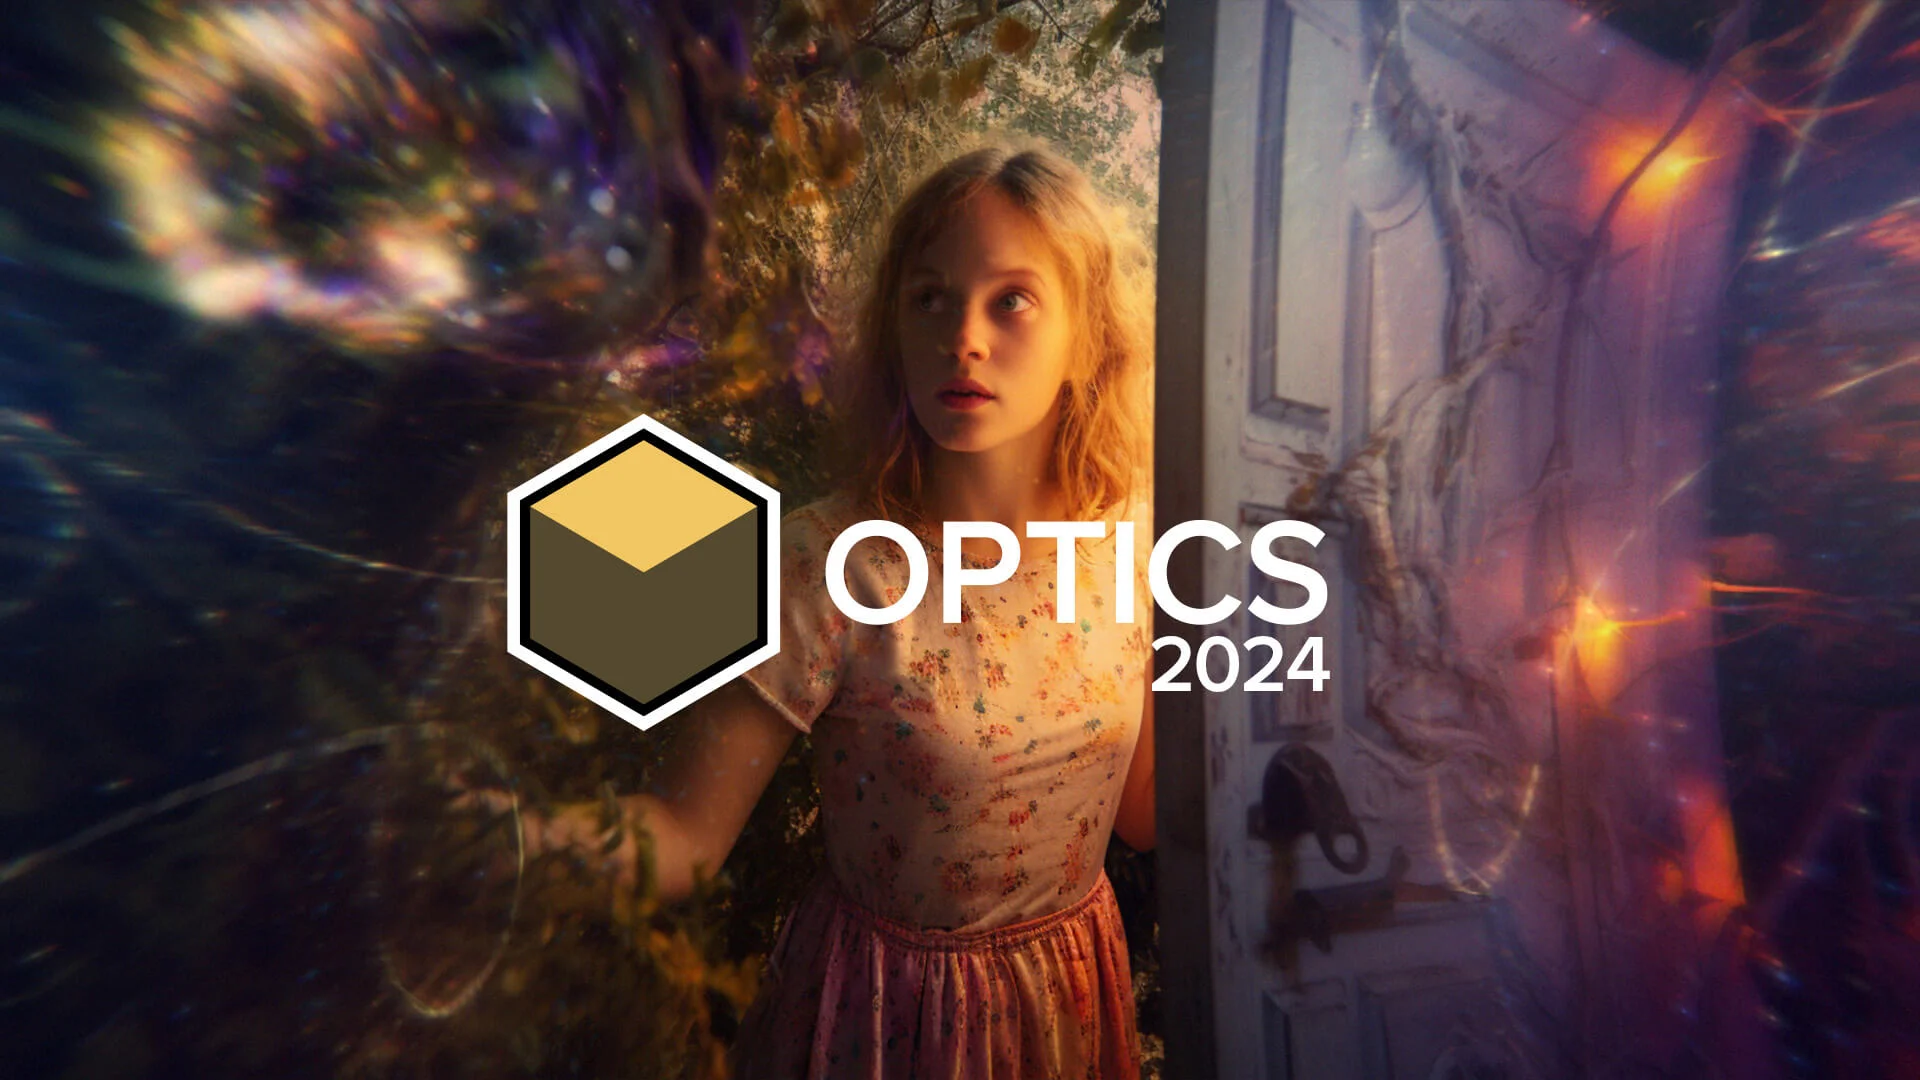 Boris FX Optics 2024.0.1.63 full setup download